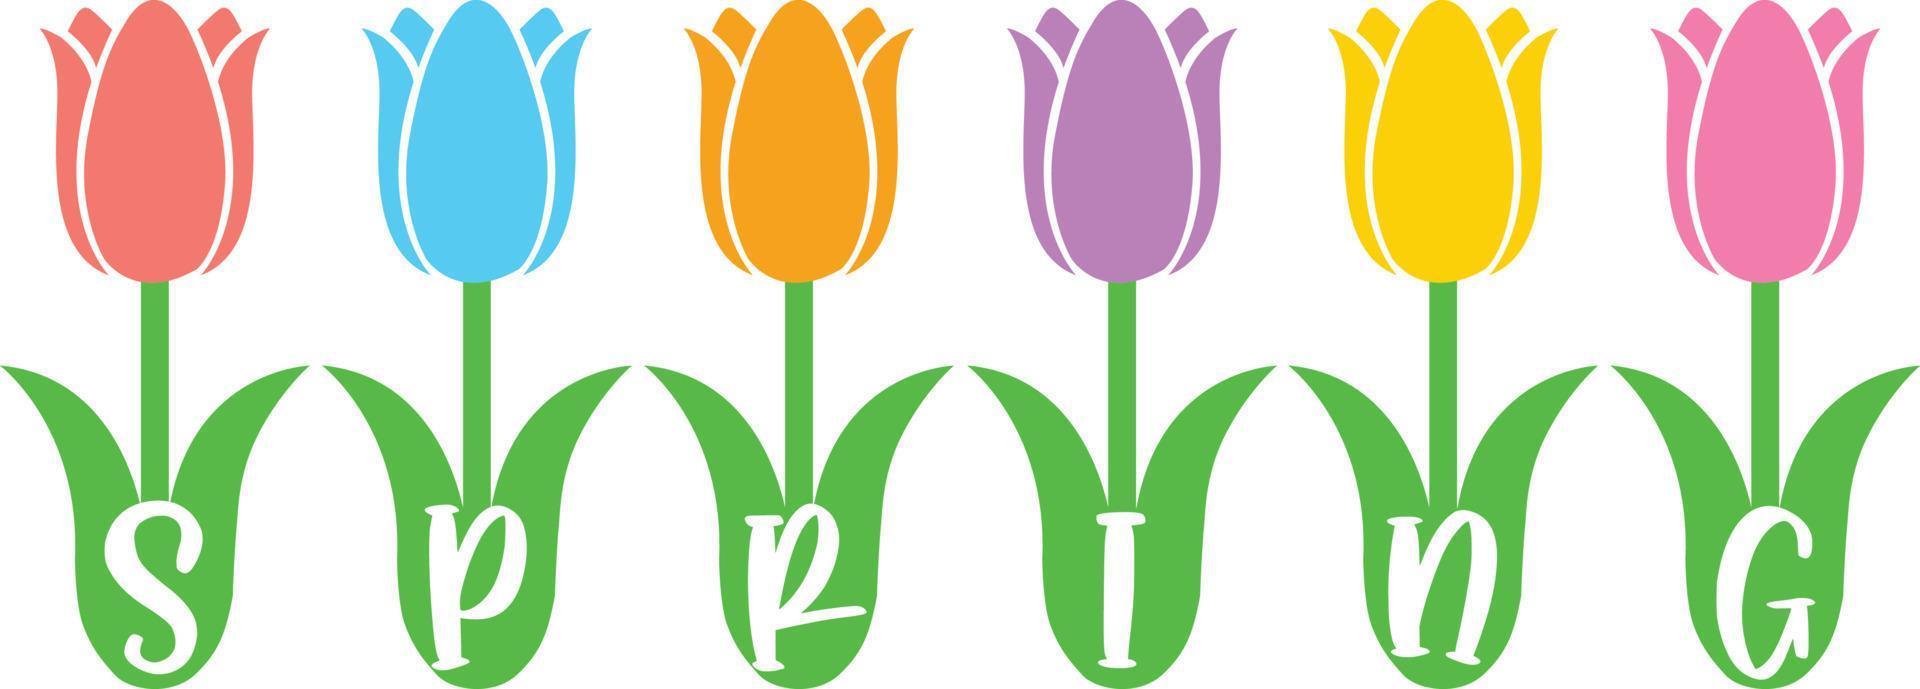 tulipani primaverili 2 vettore